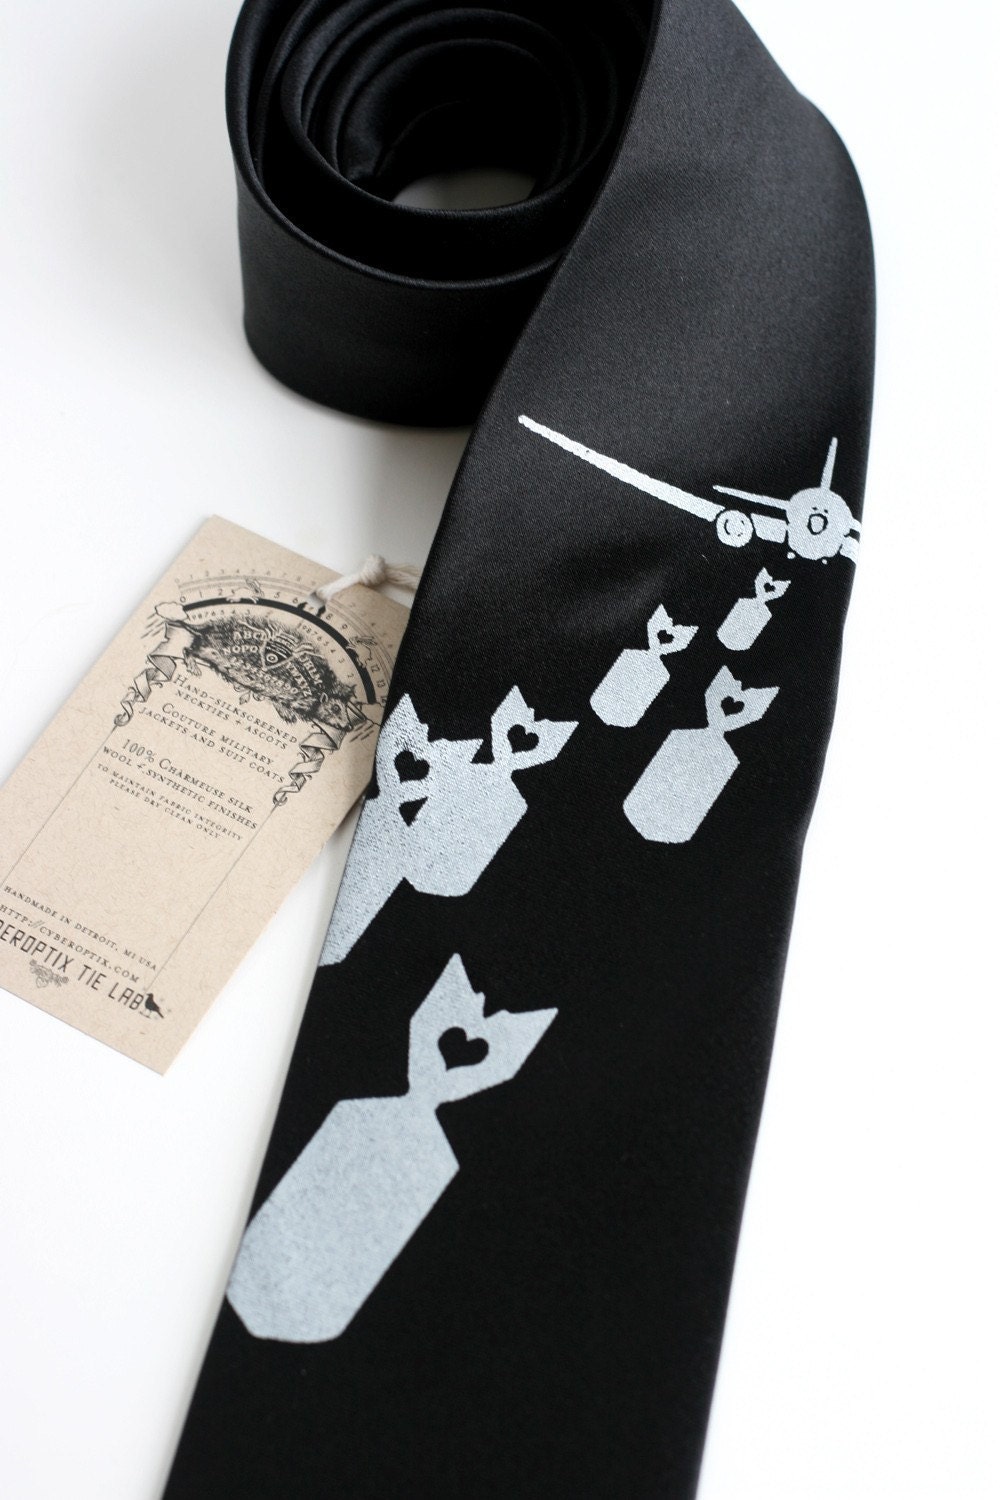 Bombs Away NARROW tie - silkscreened necktie, exploding lovenotes, silver on black